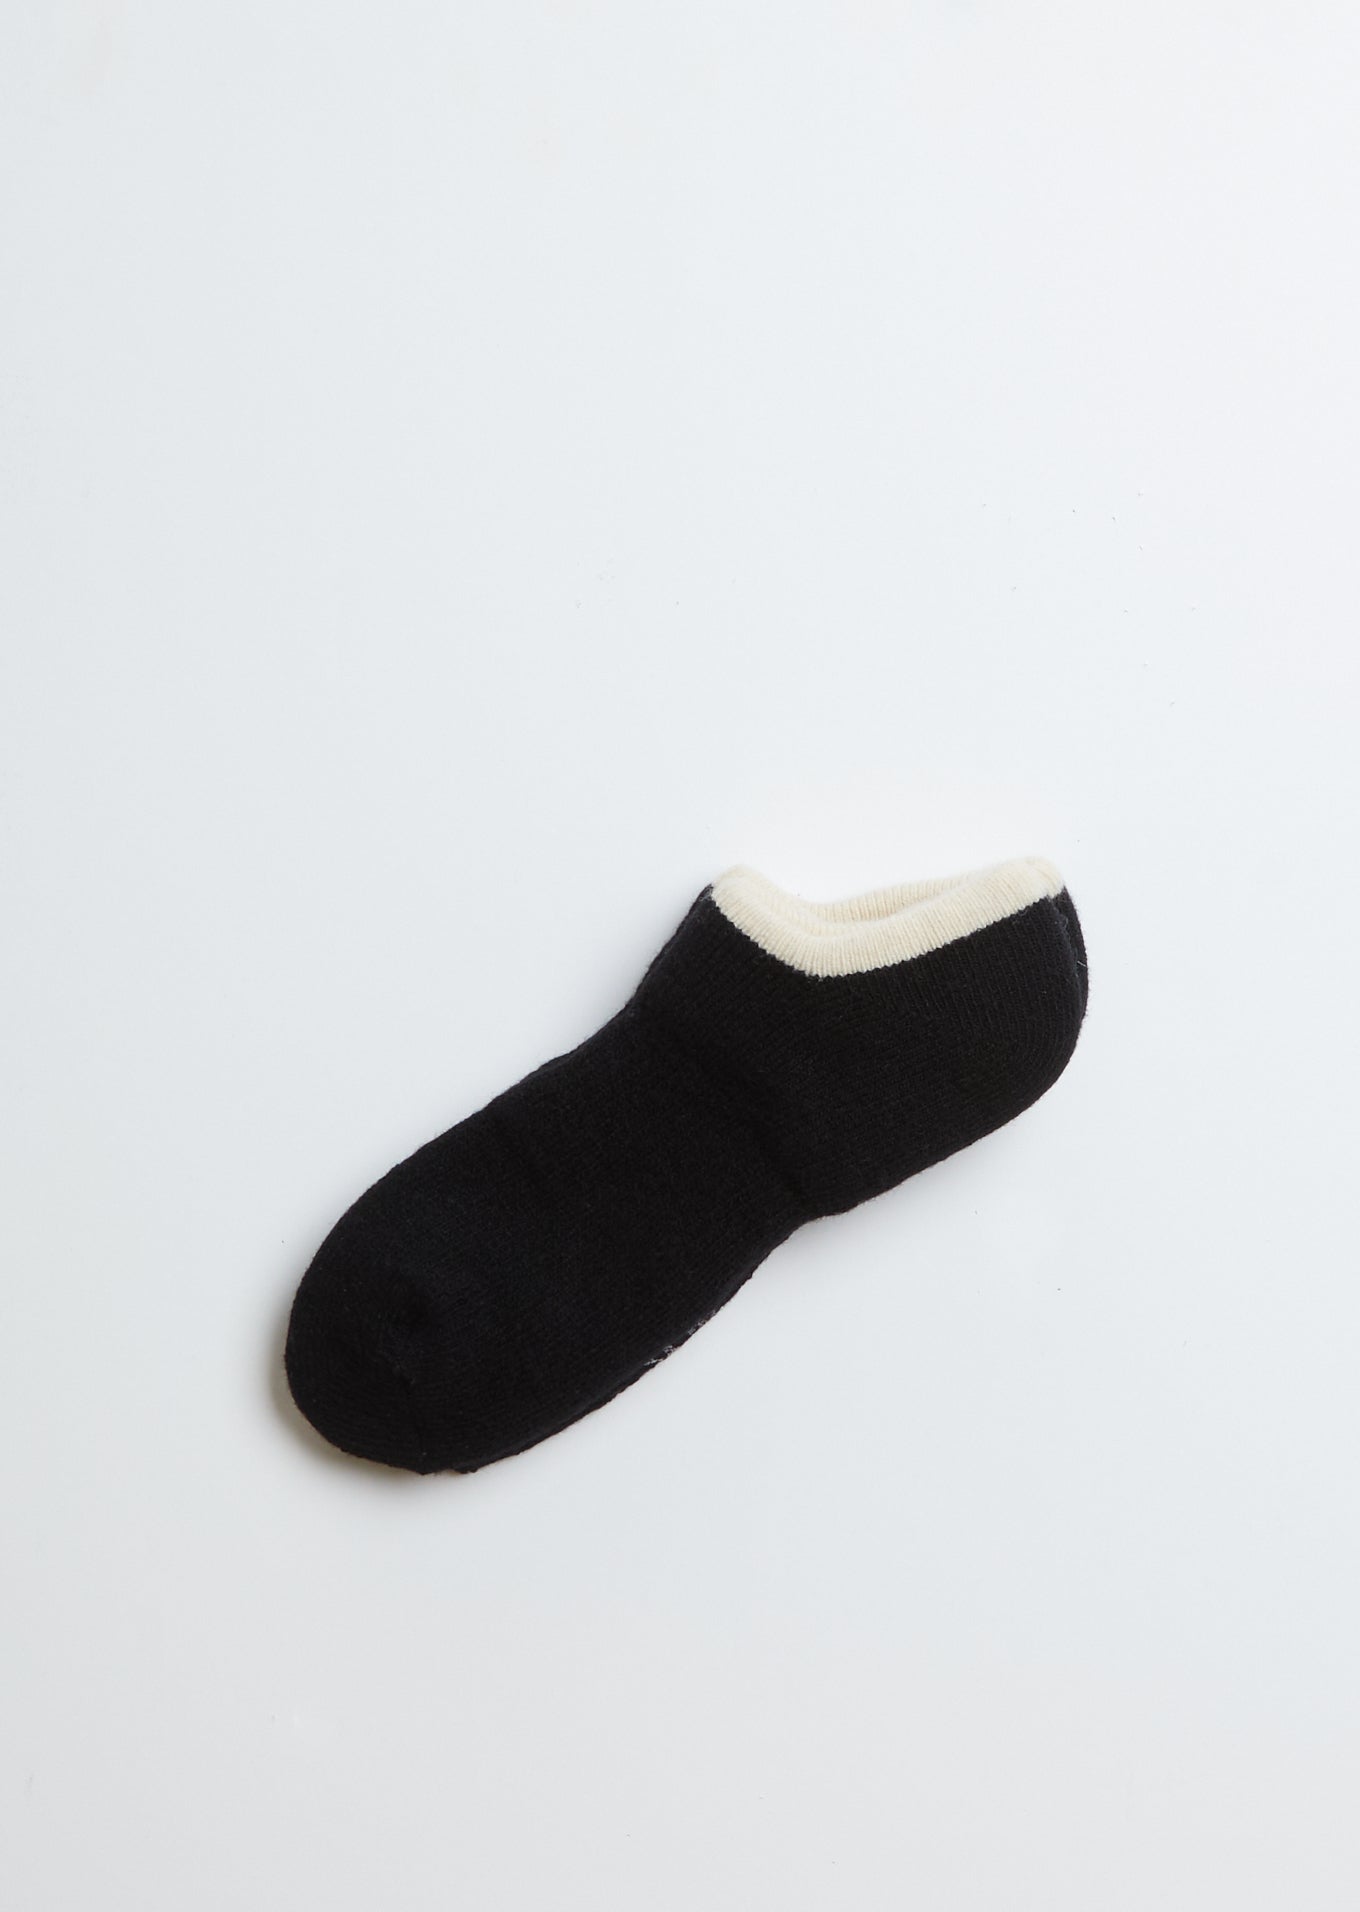 Double Pile Socks   Black